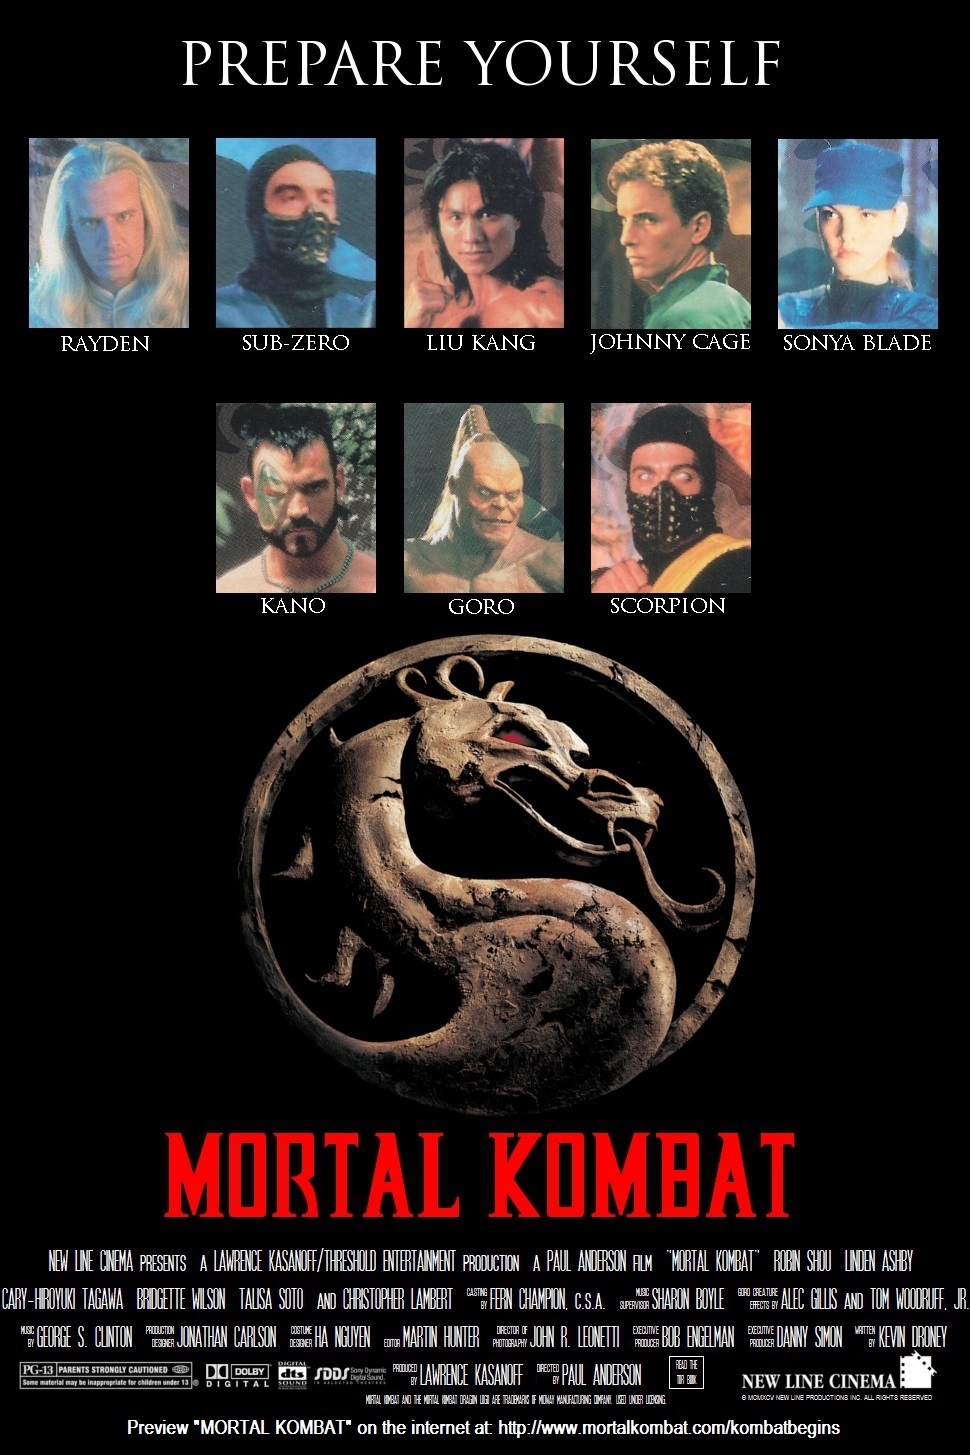 Mortal Kombat 1 (1995) Flawless Victory